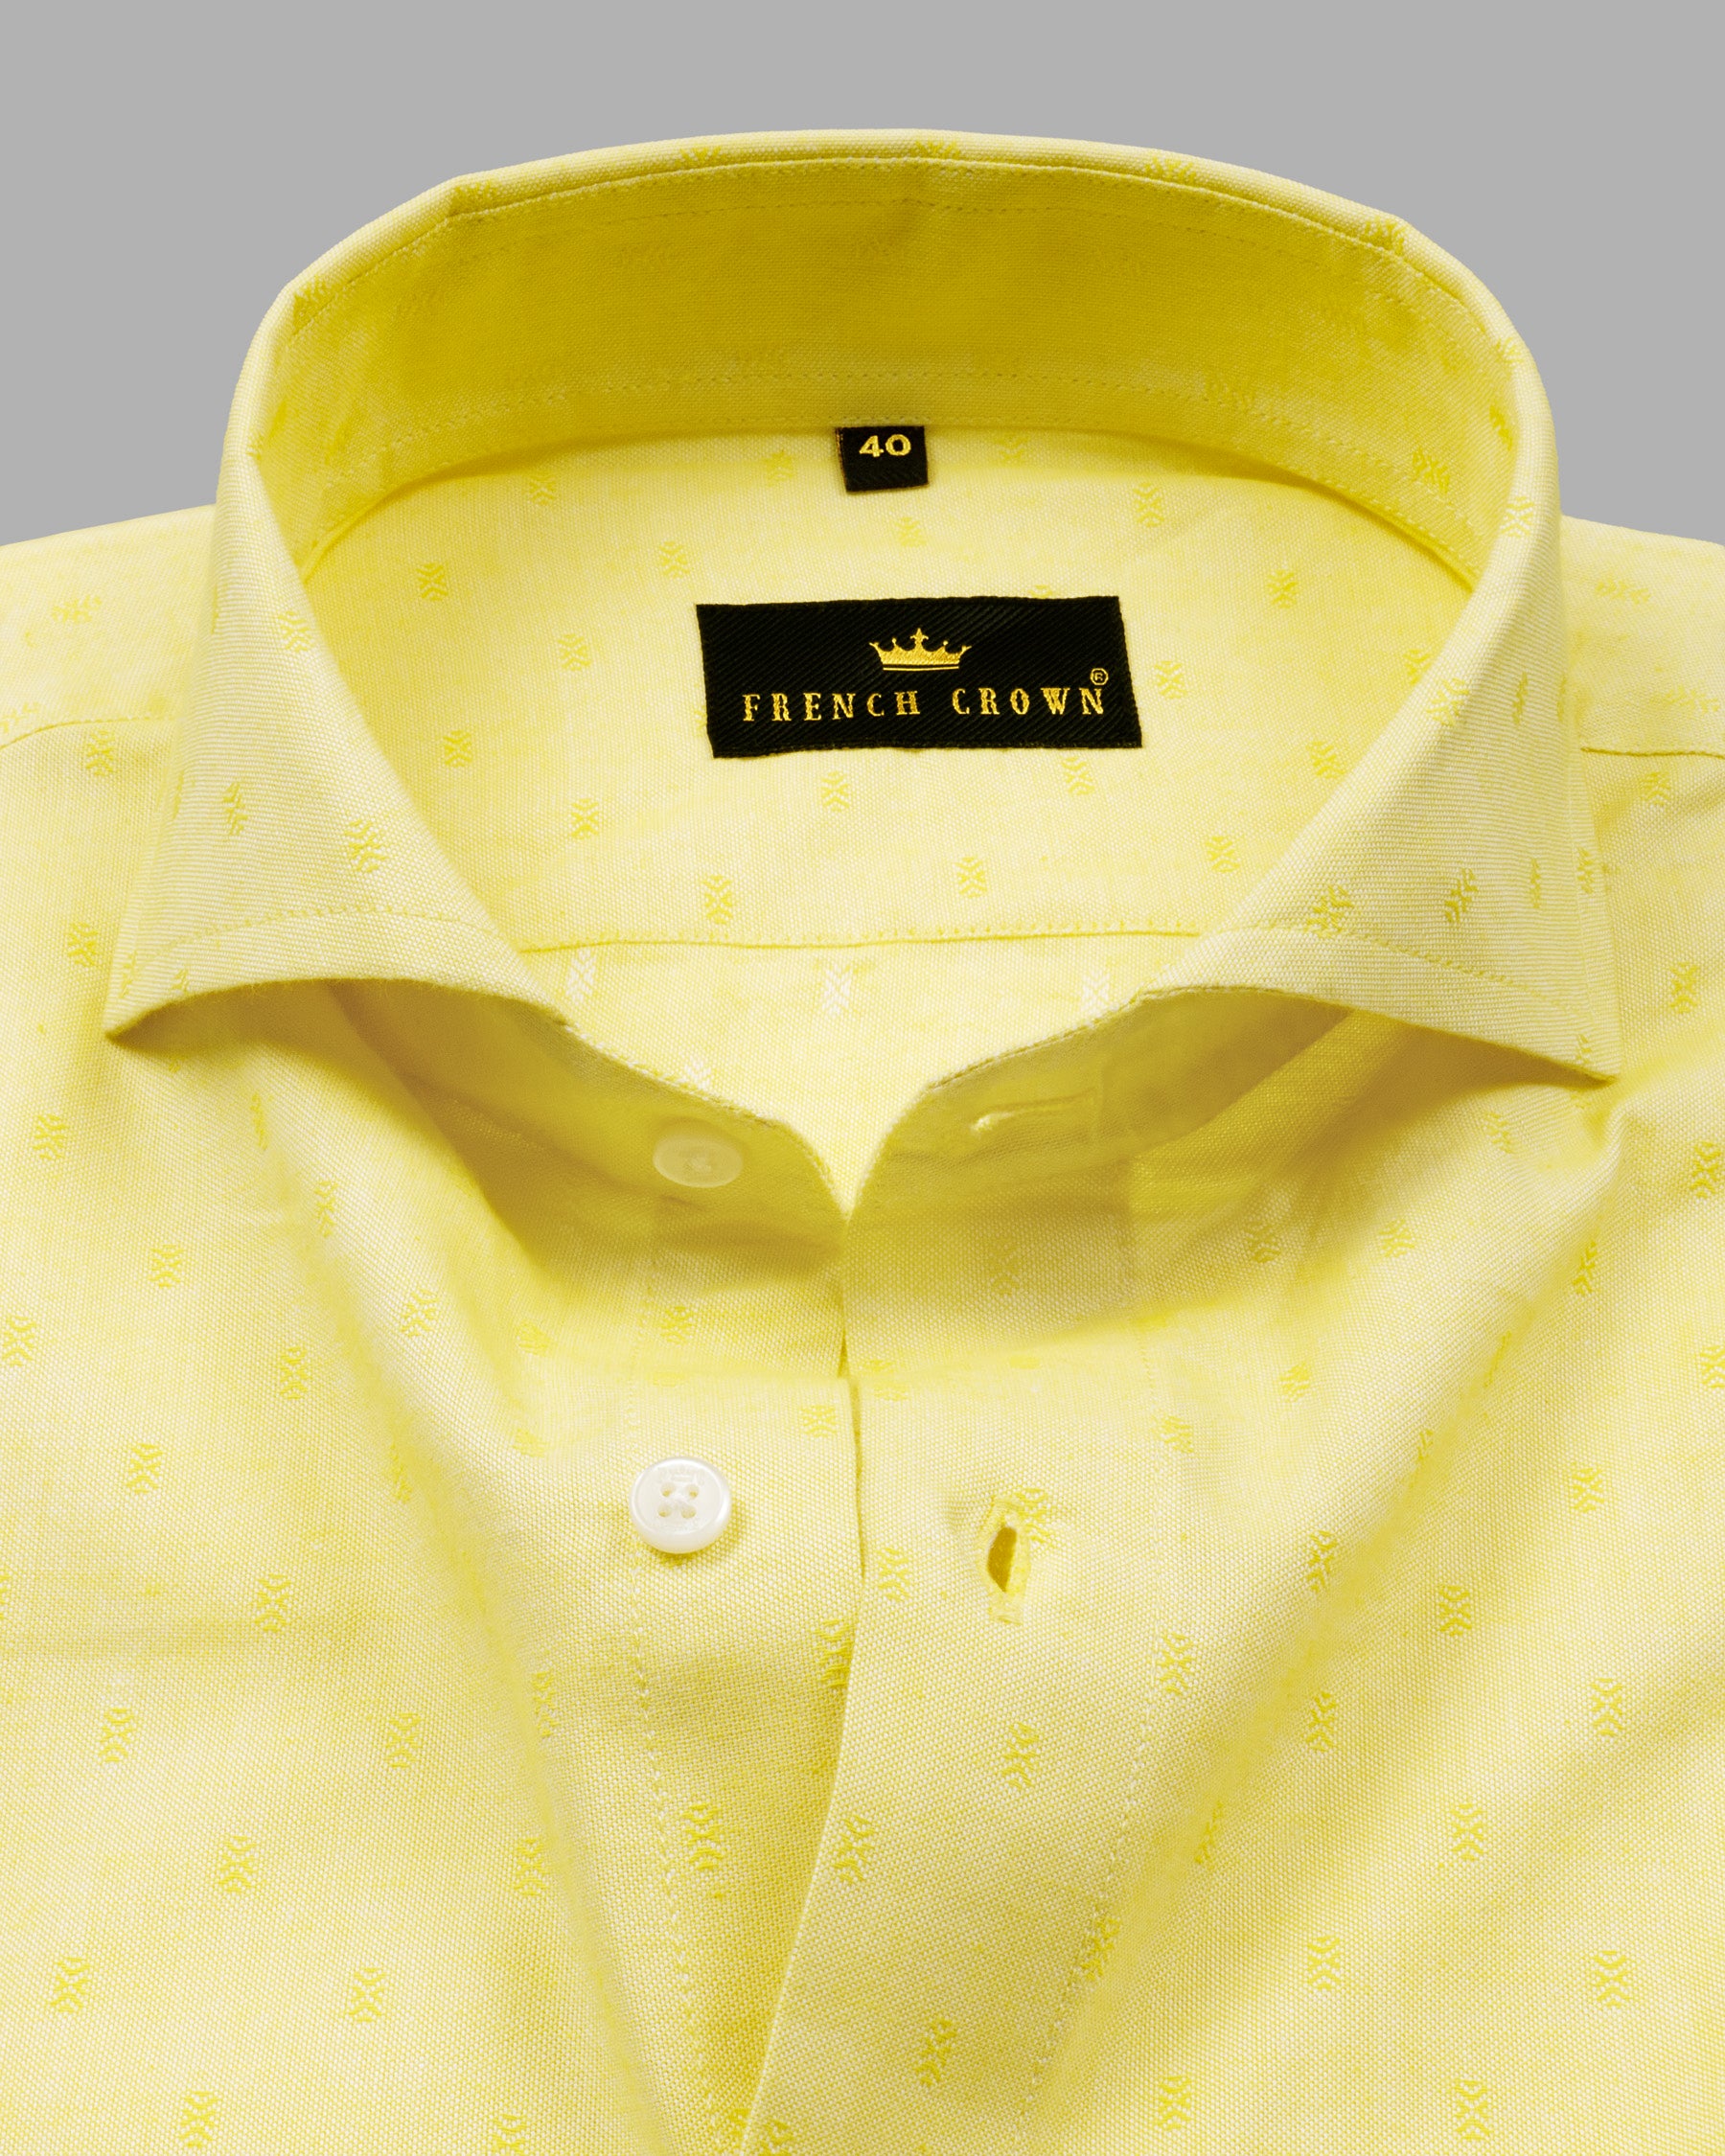 Marigold Yellow Dobby Textured Premium Giza Cotton Shirt 4719-CA-38, 4719-CA-H-38, 4719-CA-39, 4719-CA-H-39, 4719-CA-40, 4719-CA-H-40, 4719-CA-42, 4719-CA-H-42, 4719-CA-44, 4719-CA-H-44, 4719-CA-48, 4719-CA-H-48, 4719-CA-H-50, 4719-CA-52, 4719-CA-H-52, 4719-CA-H-46, 4719-CA-50, 4719-CA-46